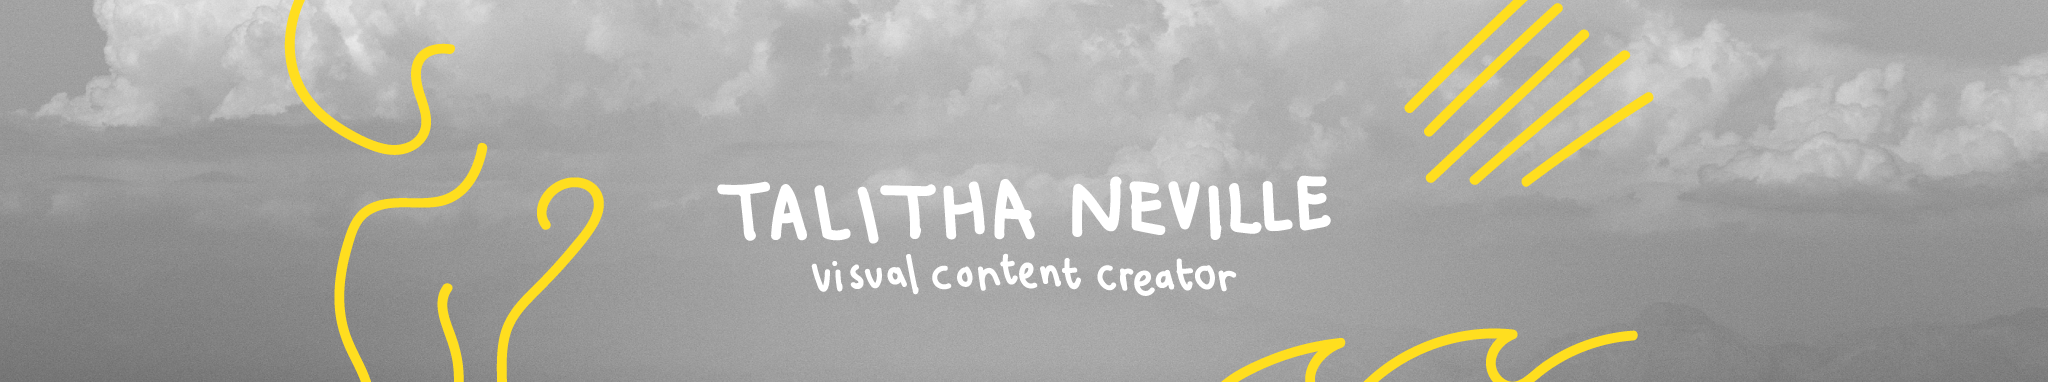 Talitha Neville's profile banner